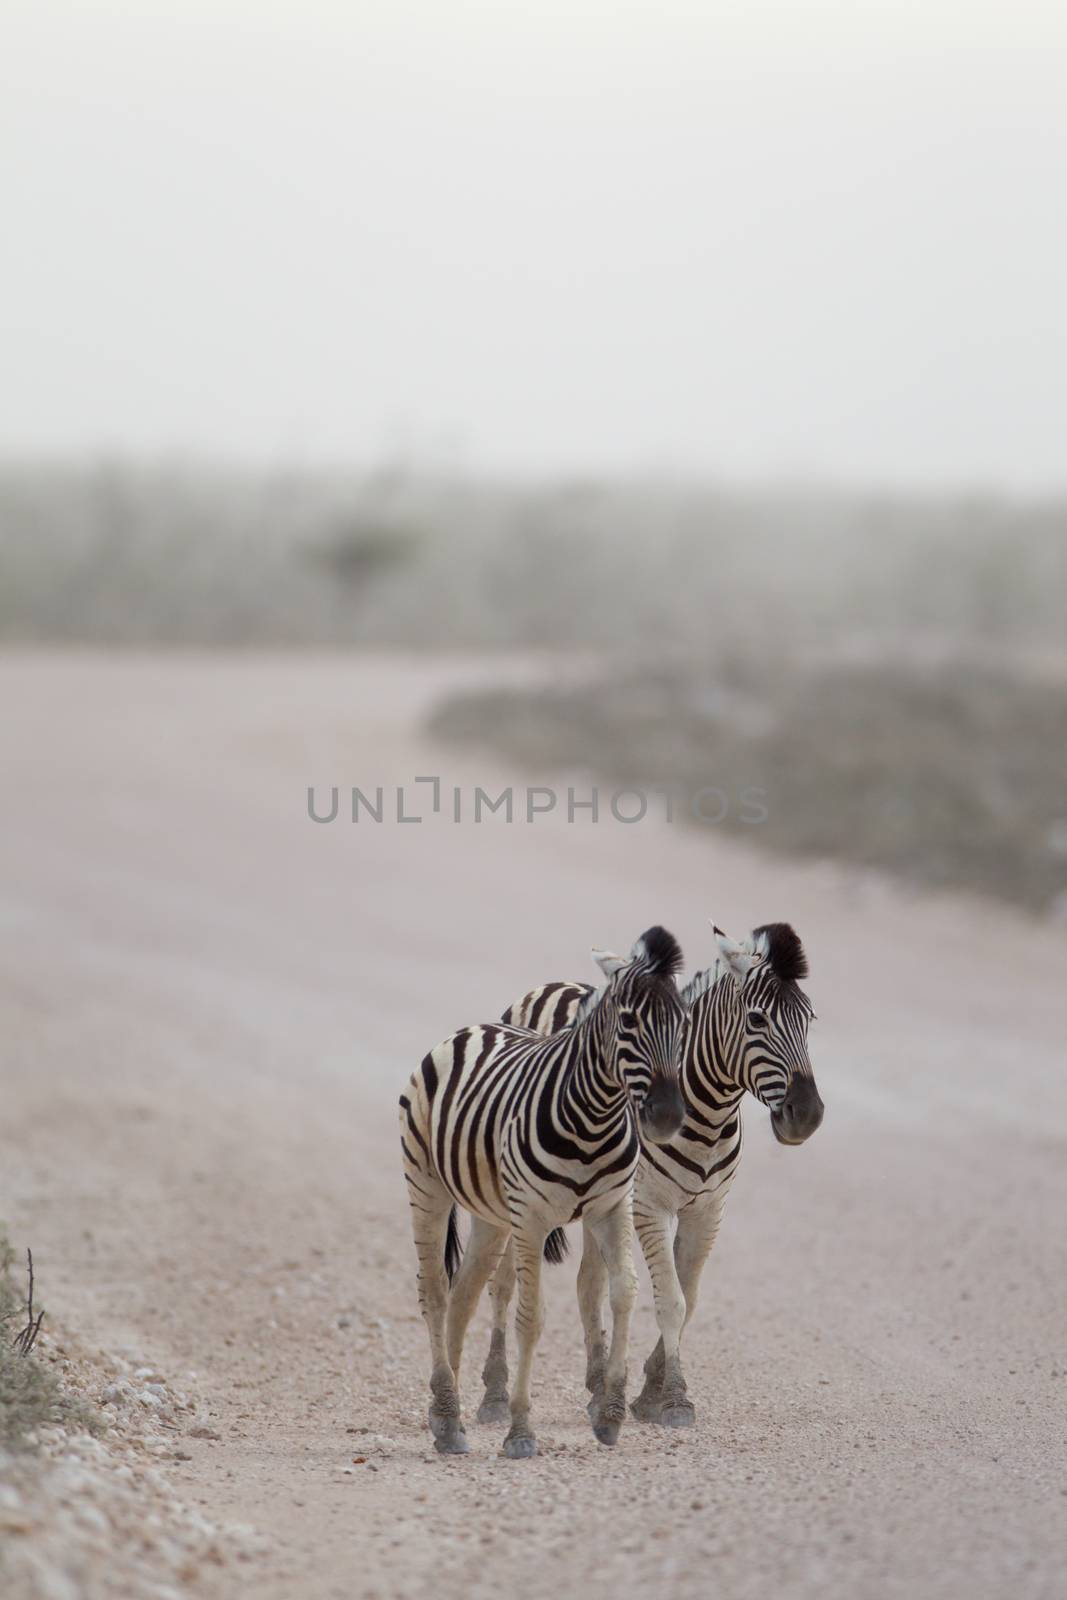 Zebra in the wilderness of Africa